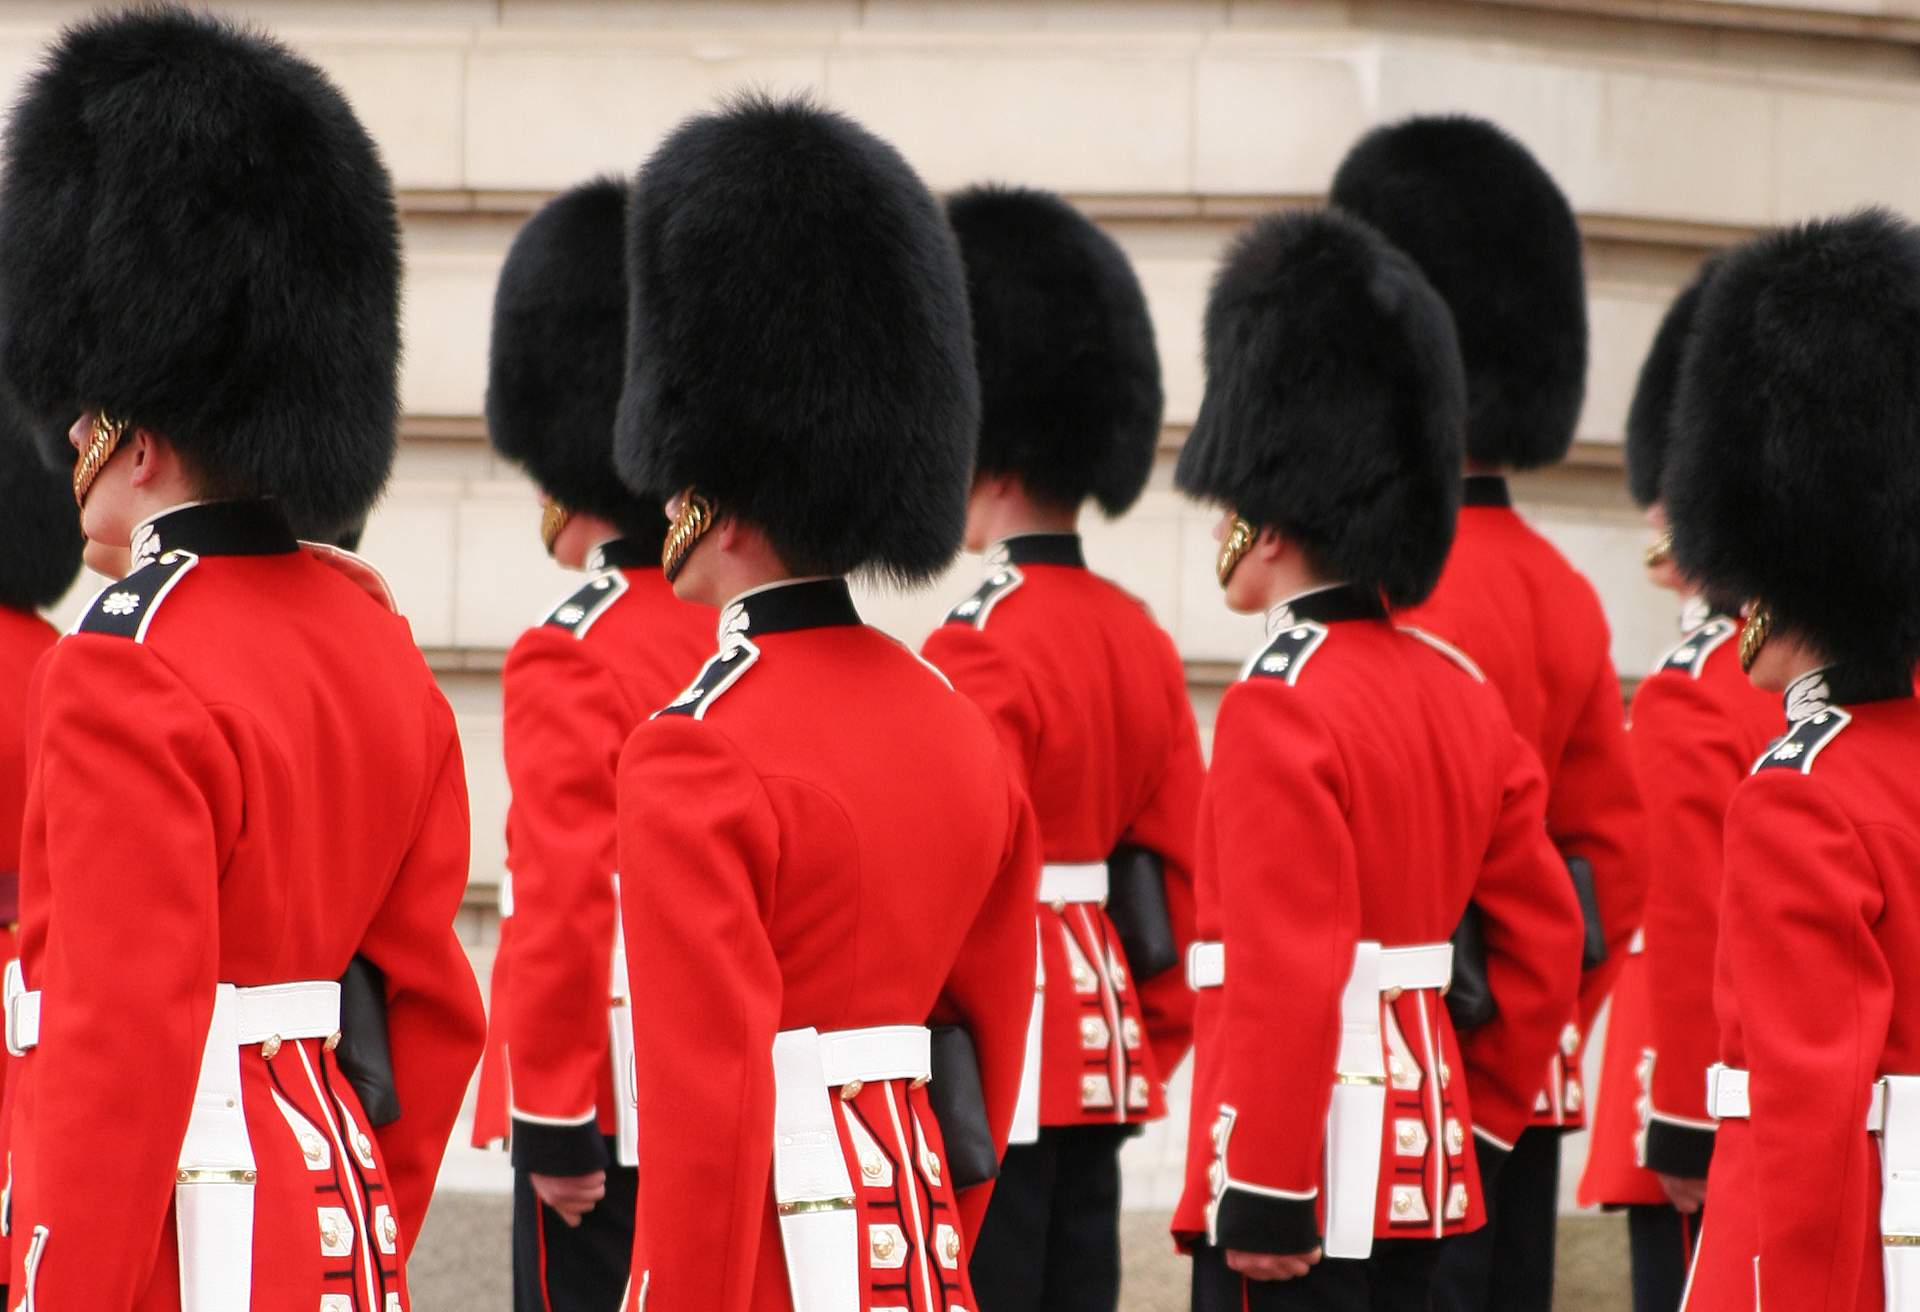 Guards in uniform, Buckingham Palace, London, UK.